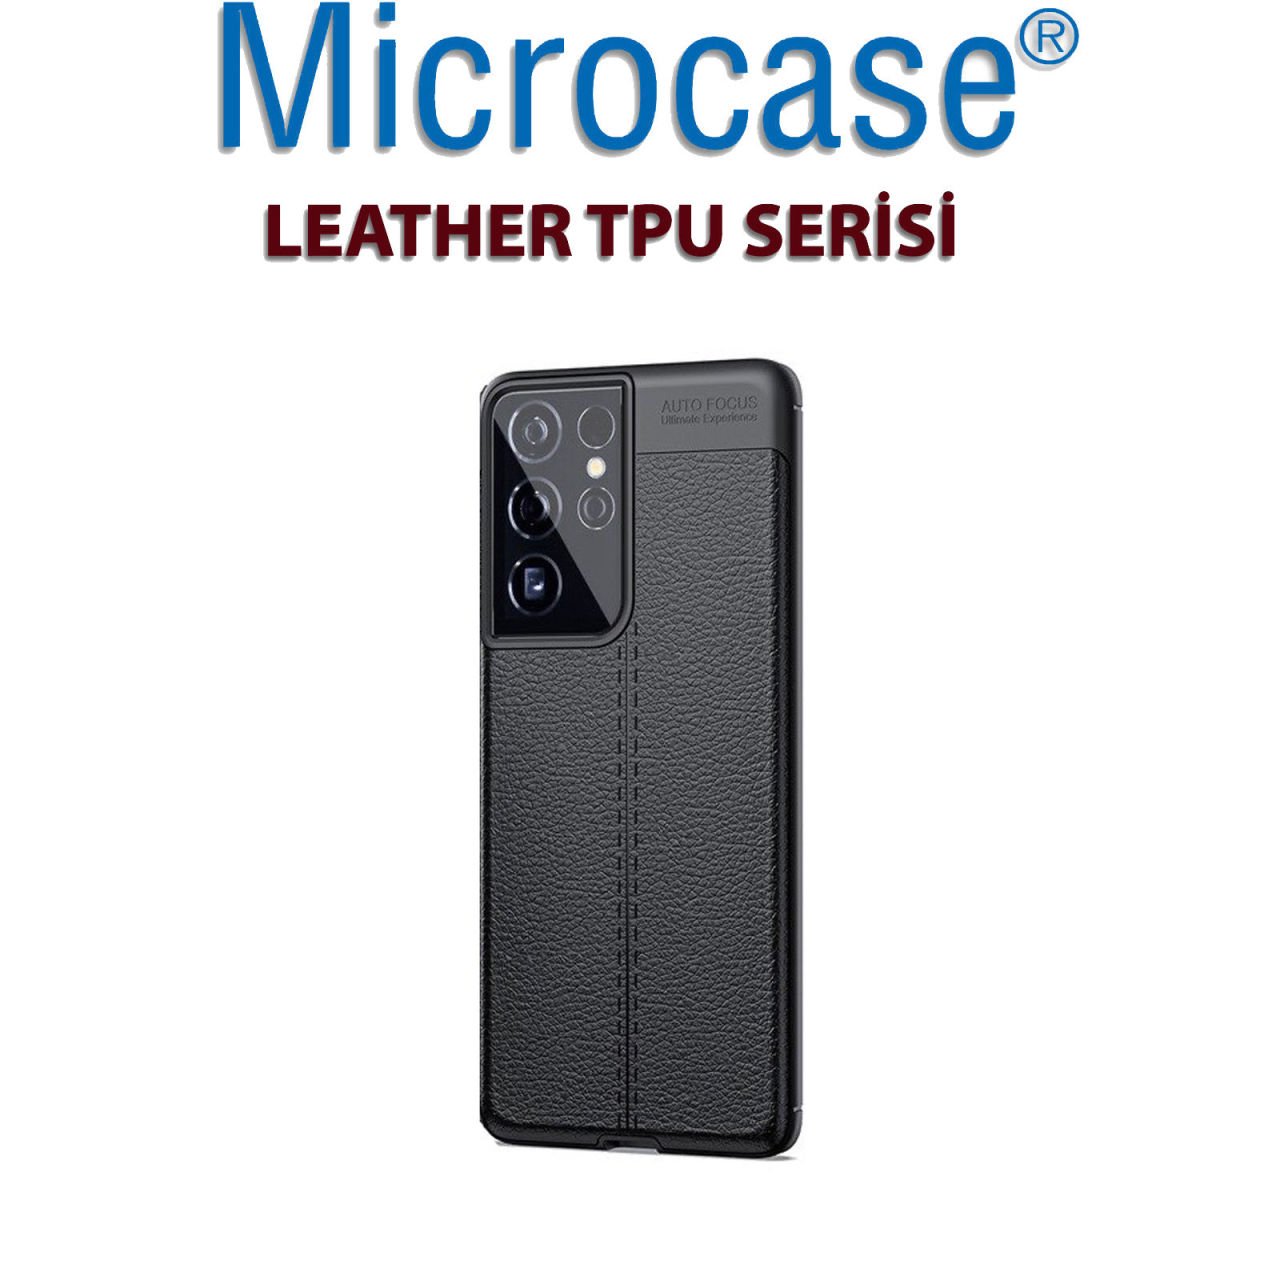 Microcase Samsung Galaxy S21 Ultra Leather Tpu Silikon Kılıf - Siyah